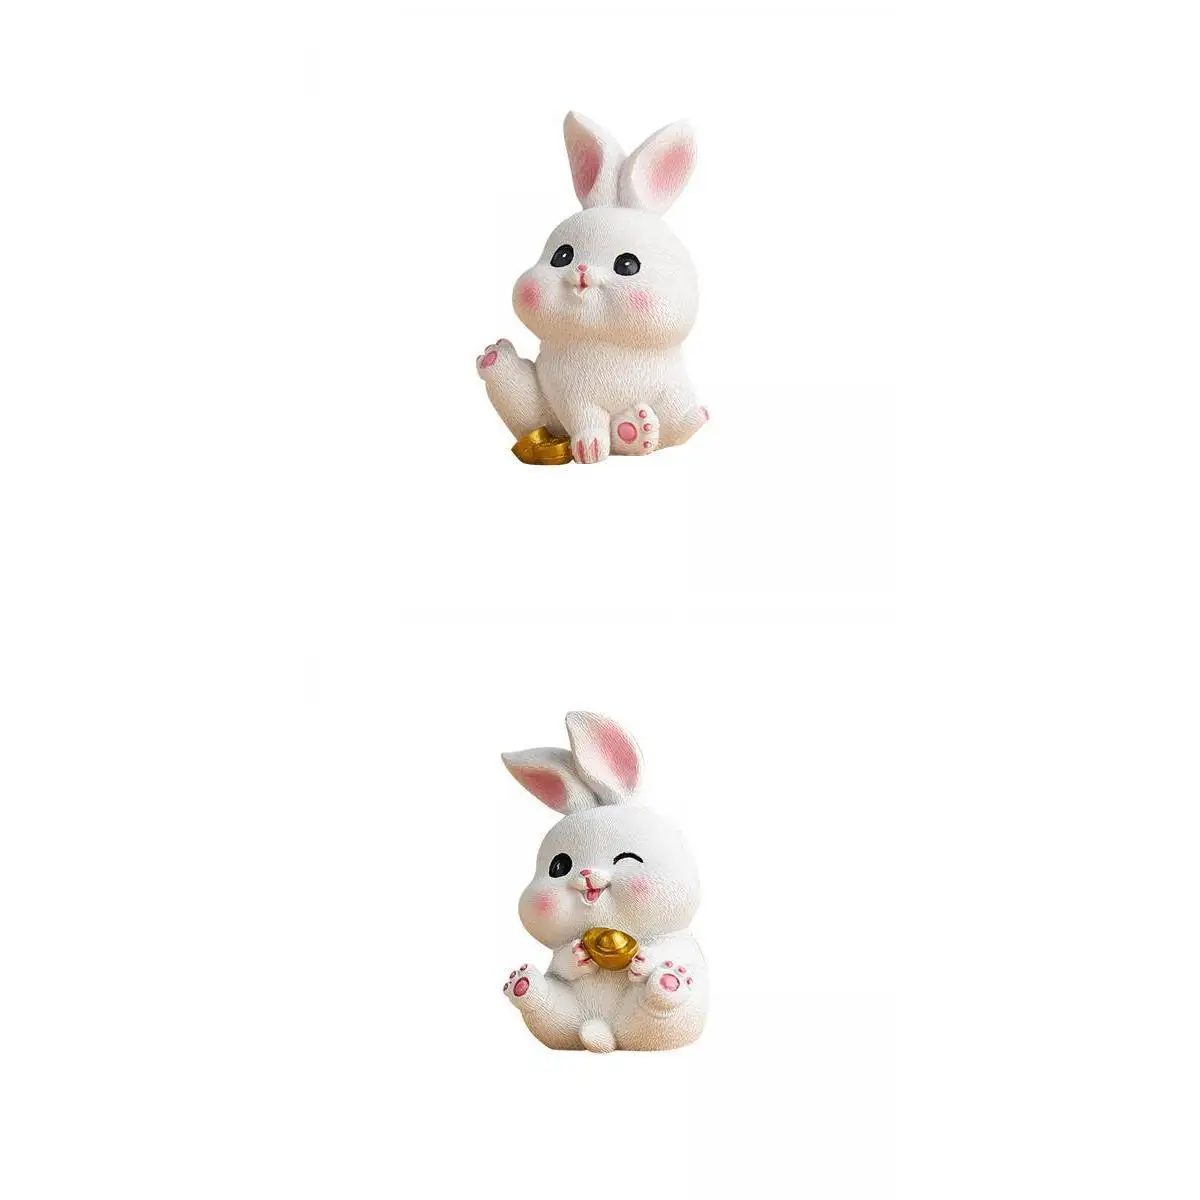 2 Pieces Rabbit Statue Miniature Desktop Ornament Sculpture for Bedroom